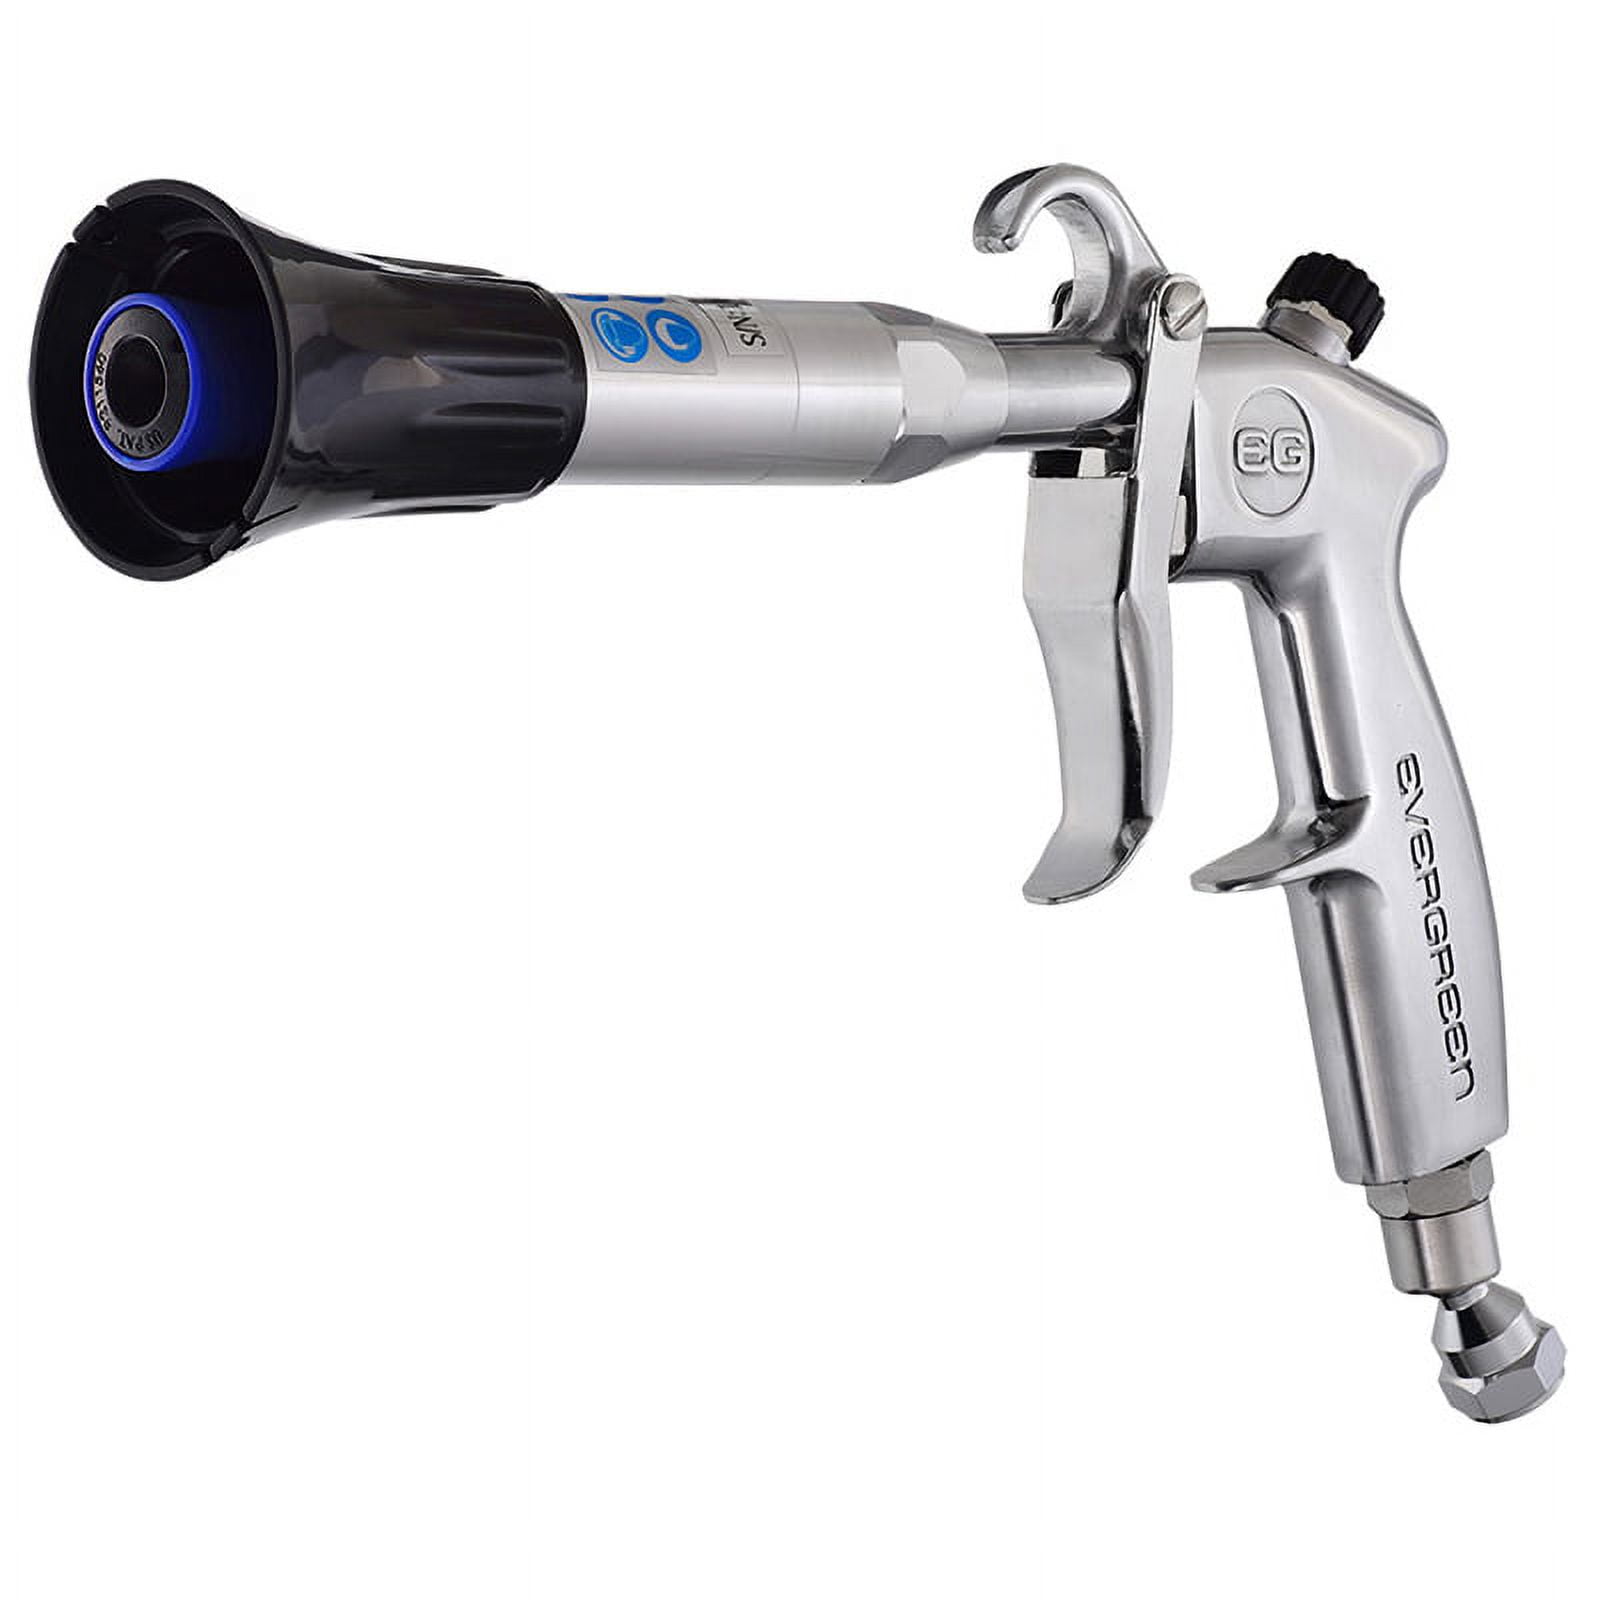 VORTEX II Dry Cleaning Gun  Buy a VORTEX II Dry Cleaning Gun with